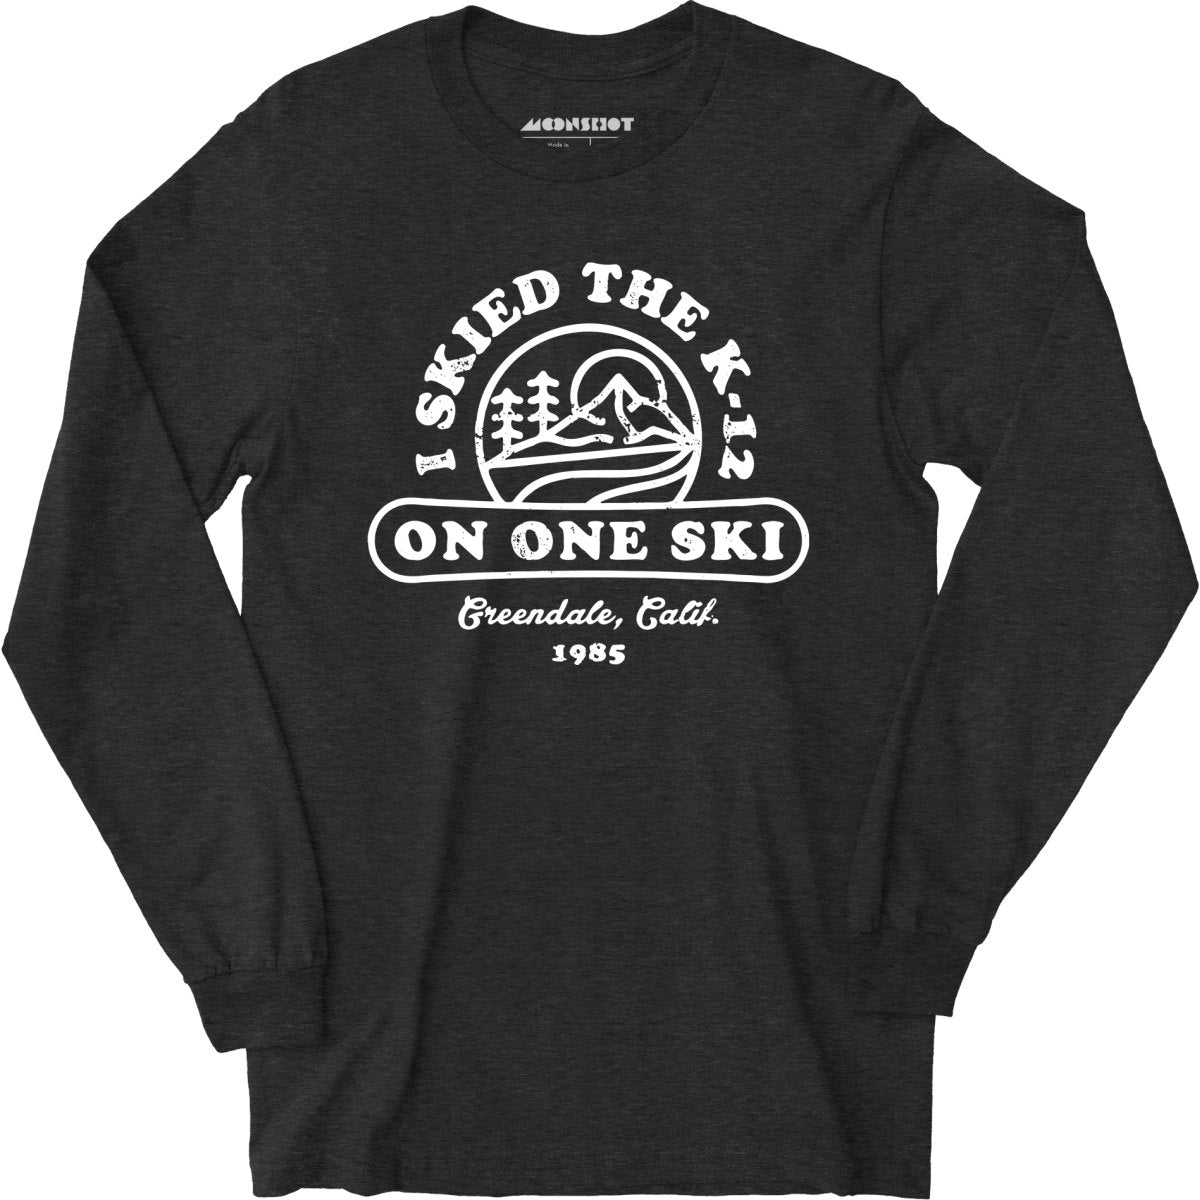 I Skied The K-12 on One Ski v2 - Long Sleeve T-Shirt